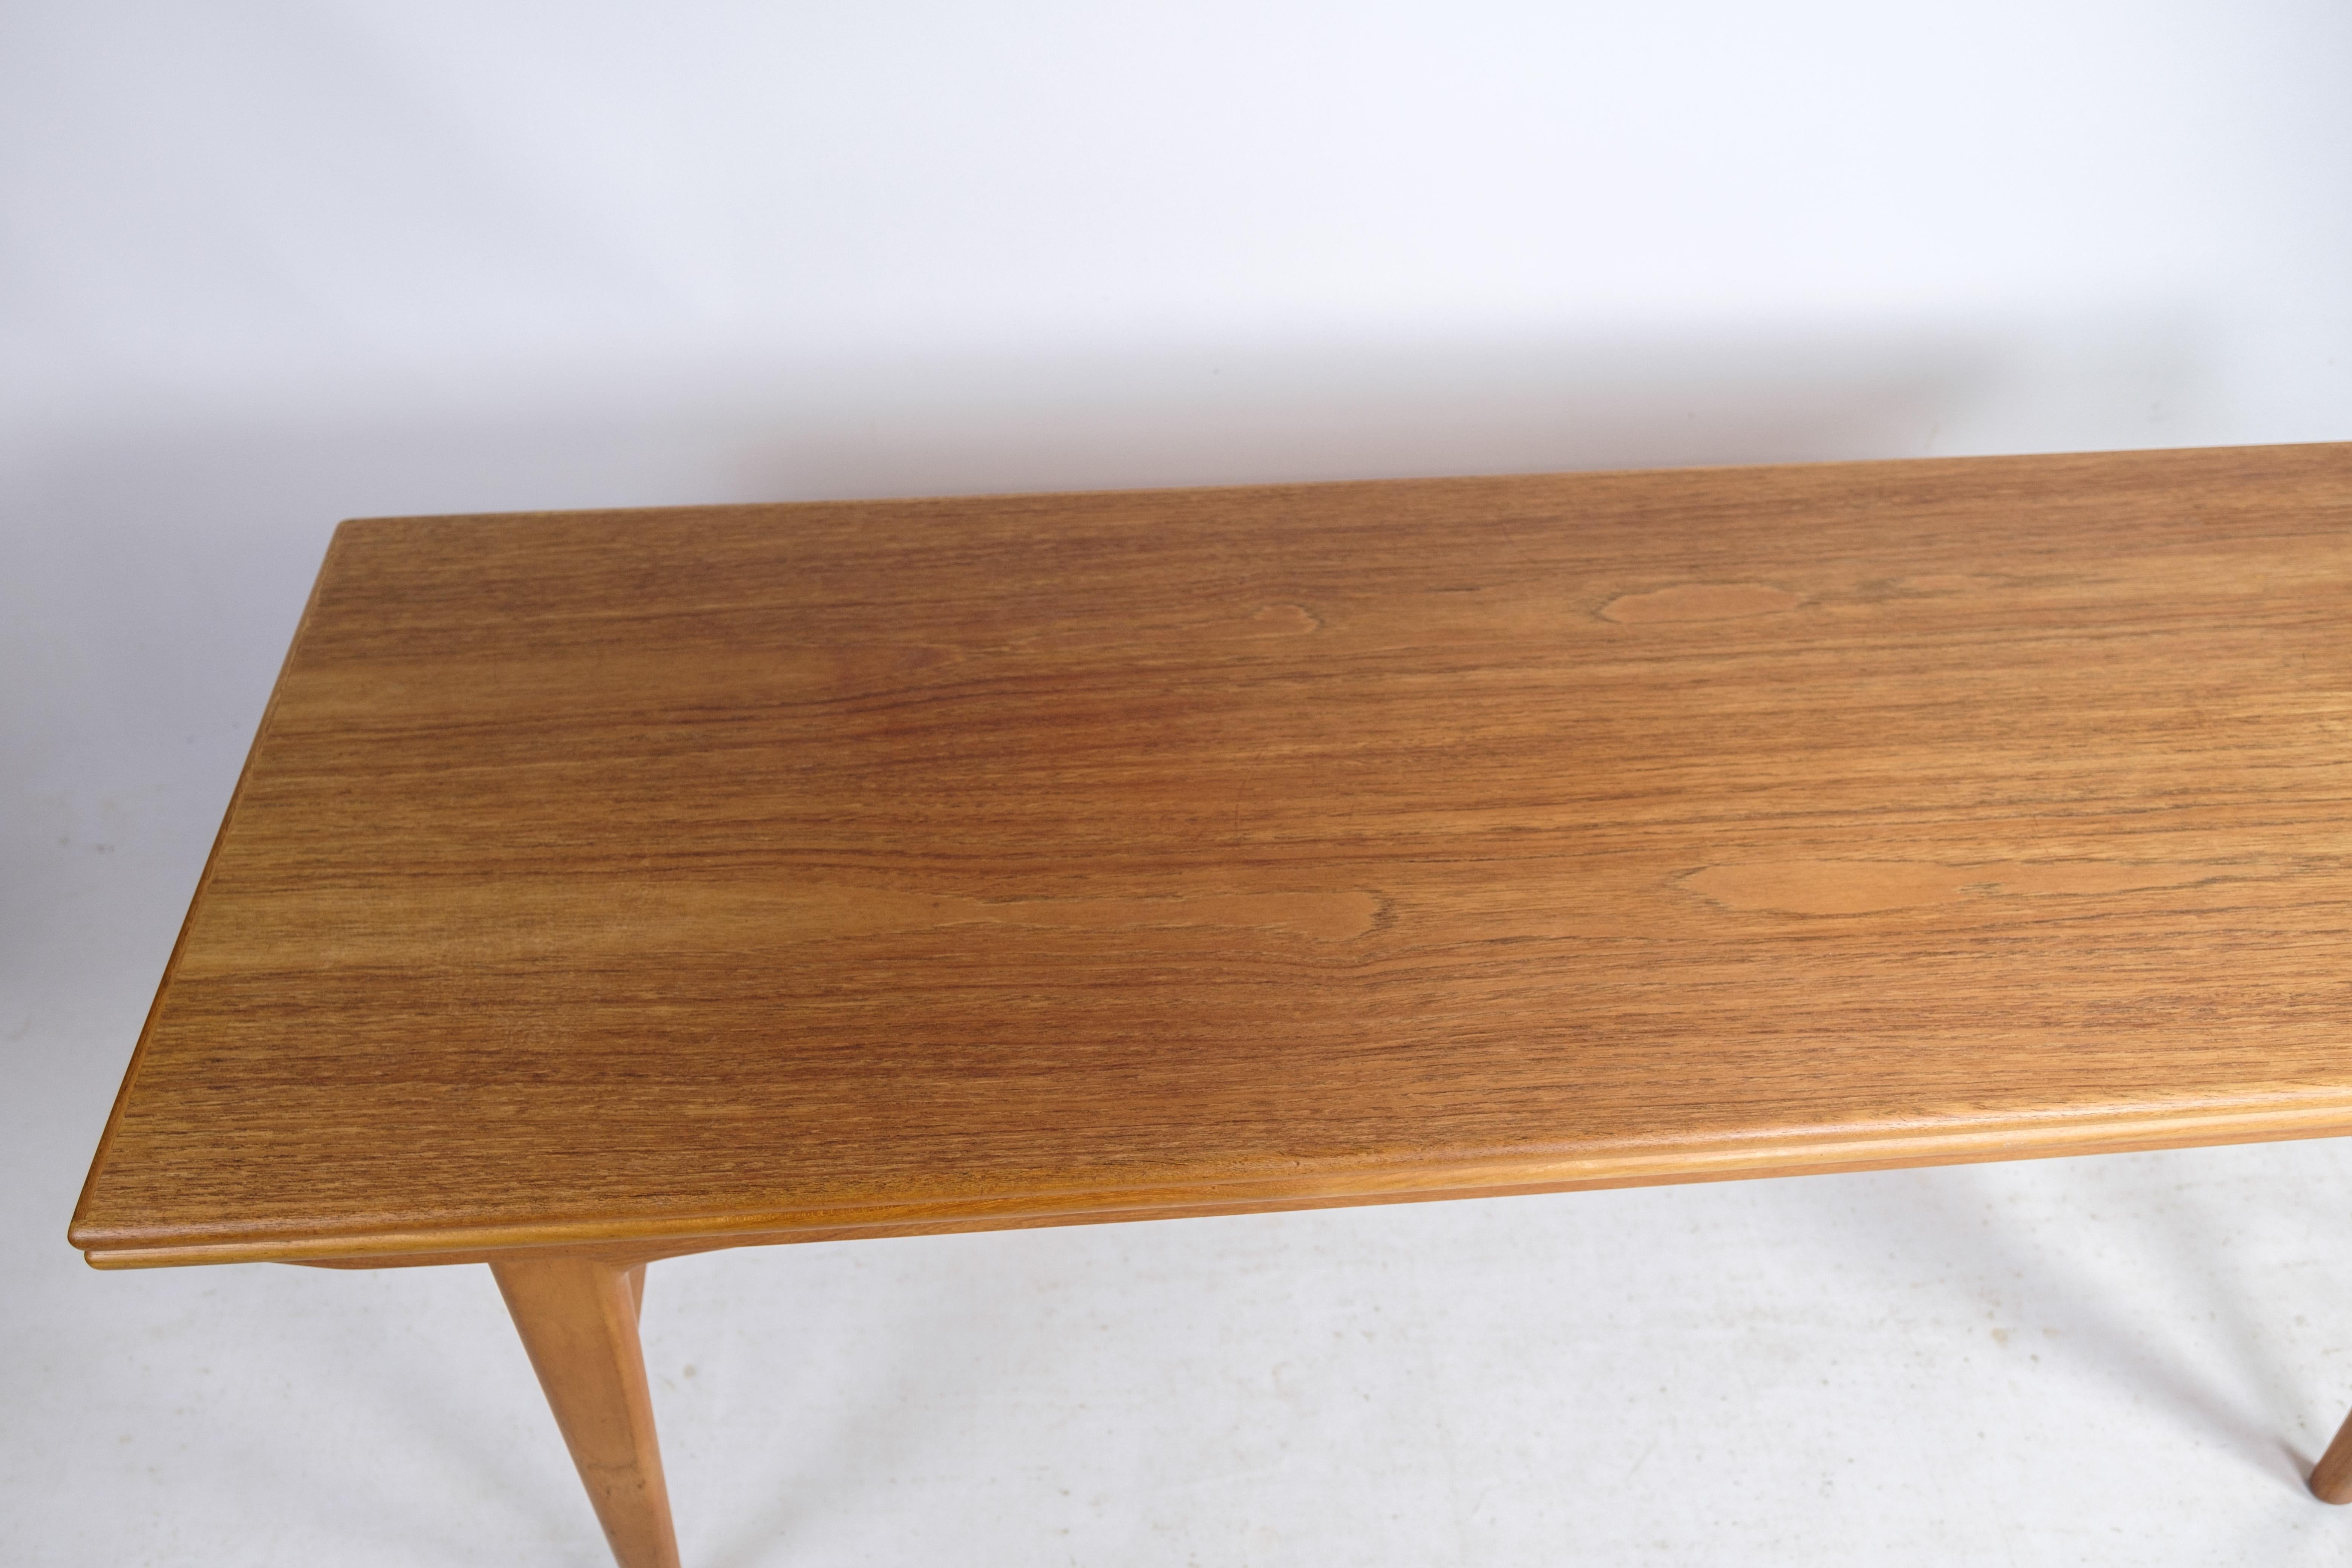 Mid-20th Century Coffee Table / Dining Table, Teak Wood, Copenhagen Table, Danish Furniture Manuf